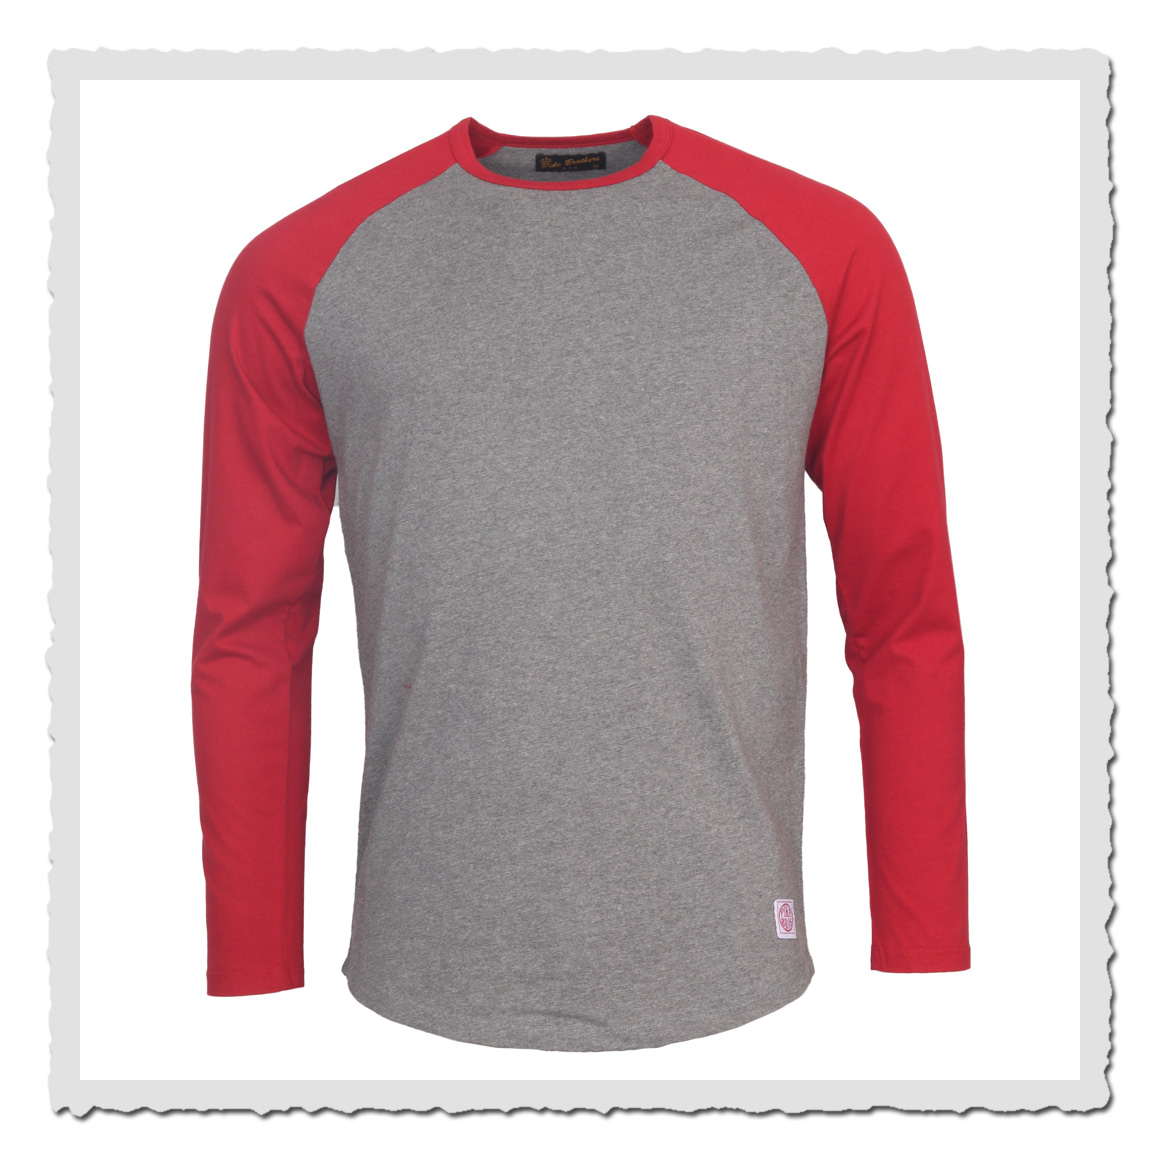 1968 Baseball Shirt Mugo red